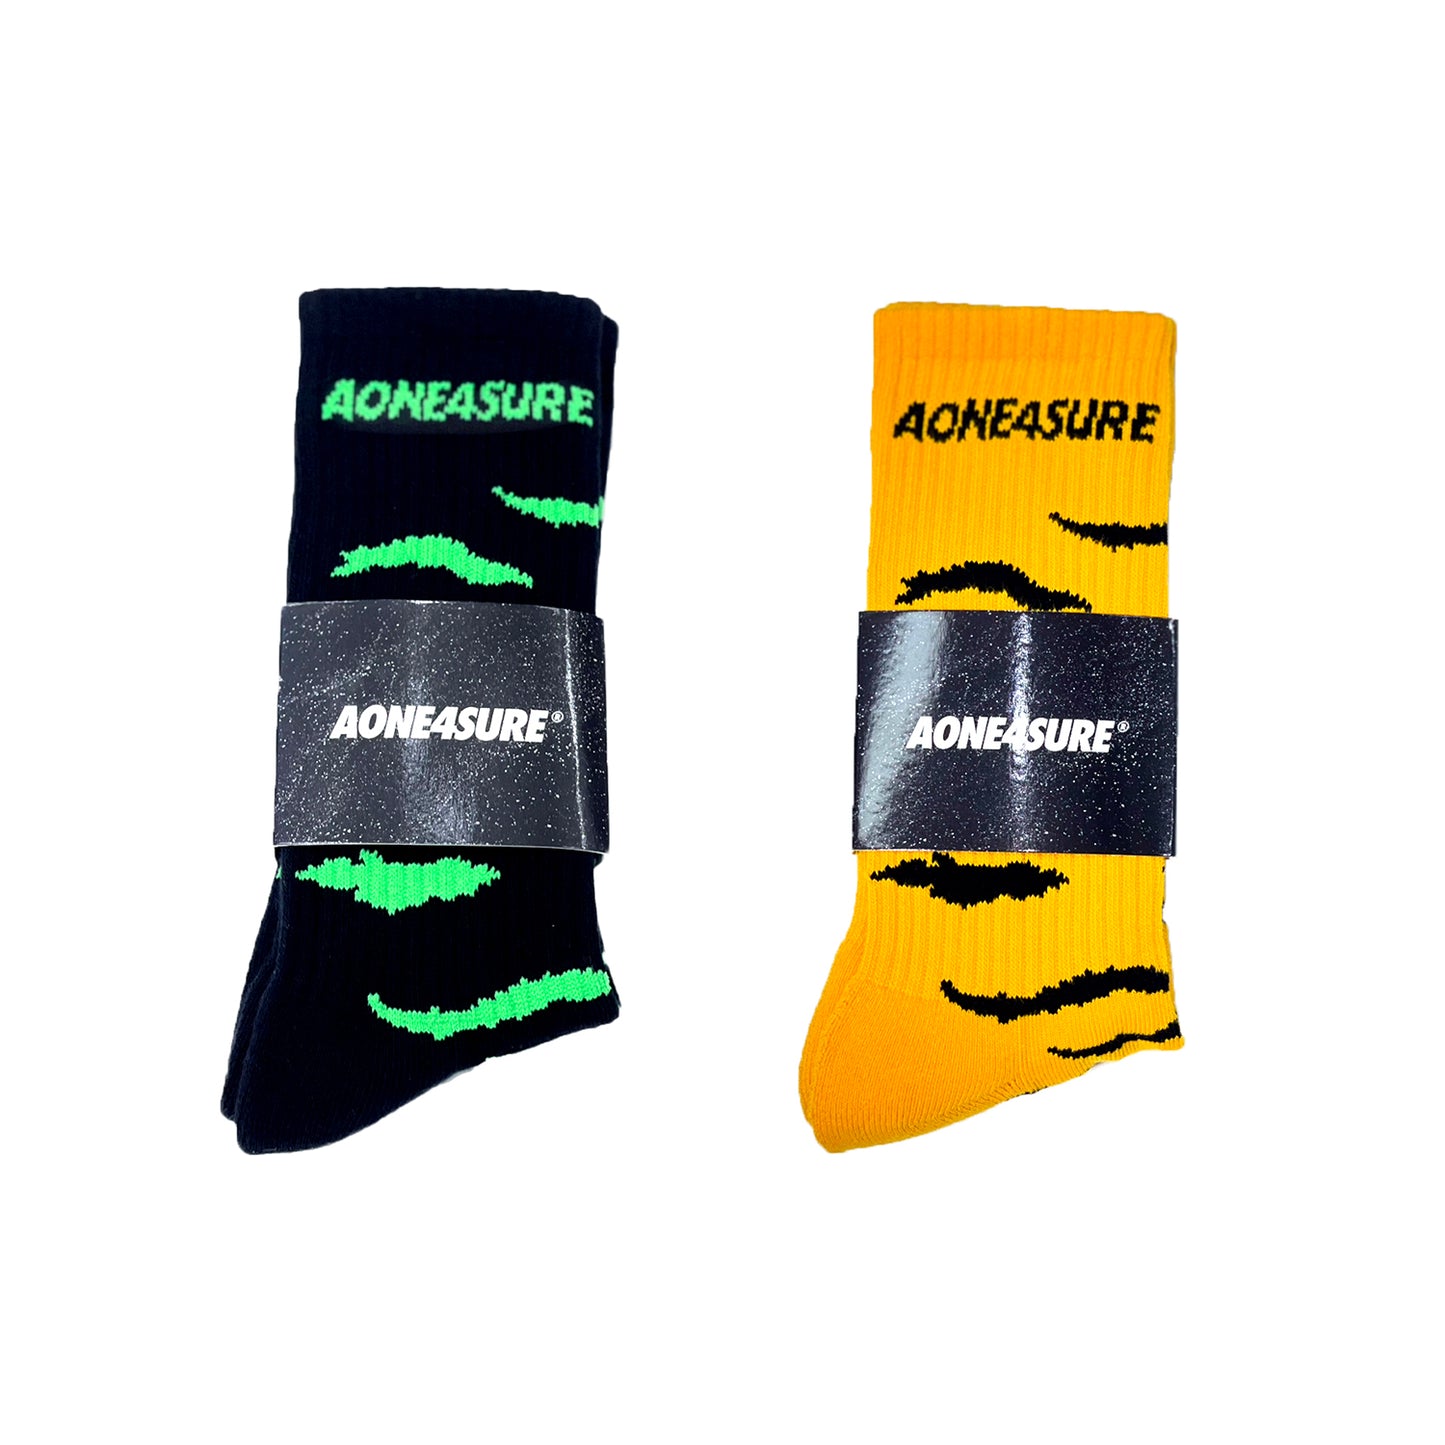 AONE4SURE Animal Camo Socks